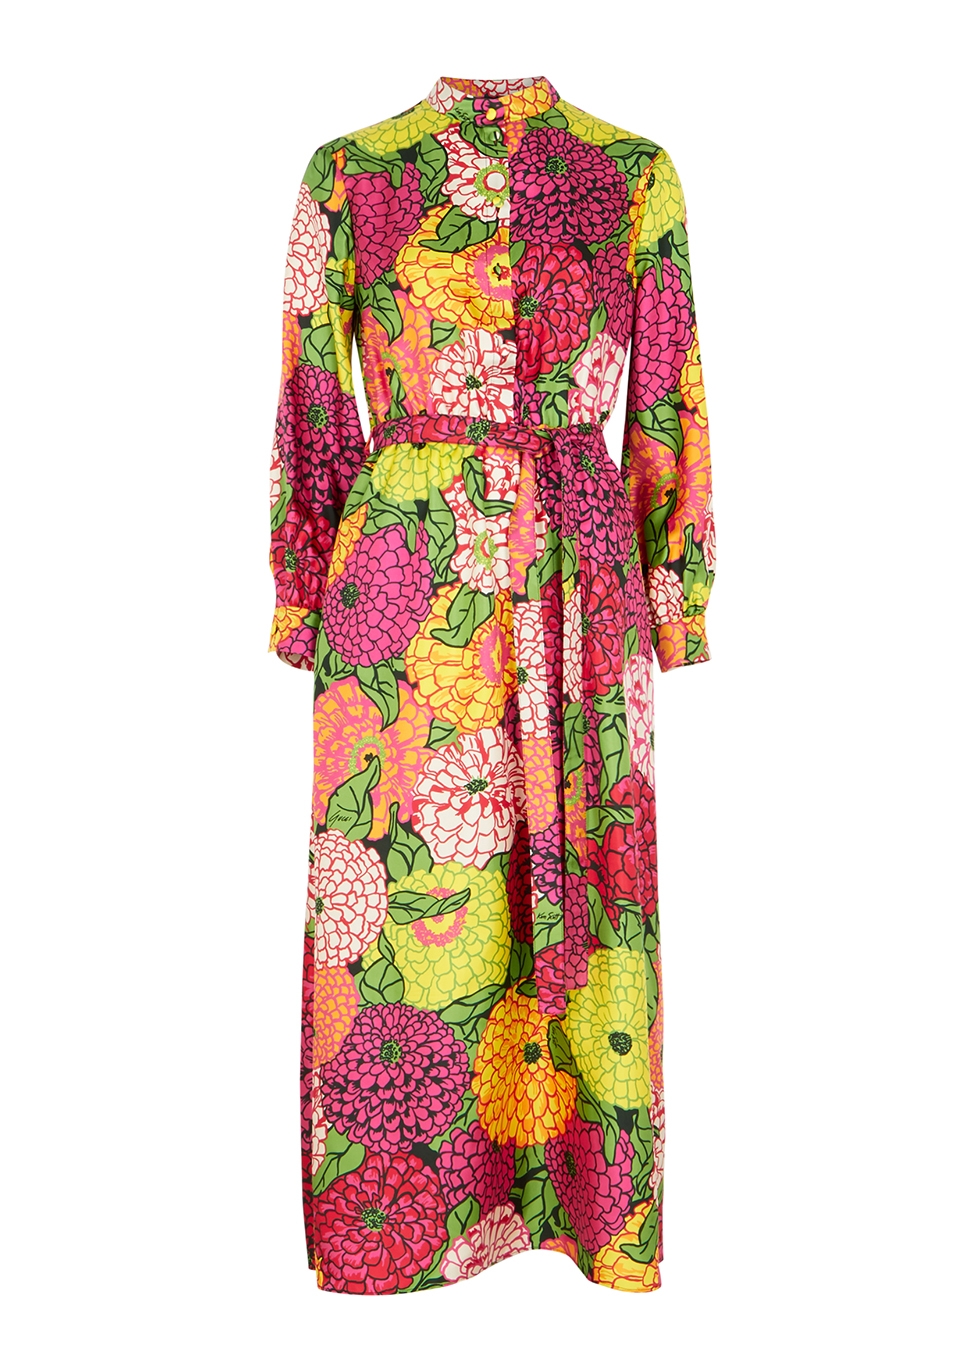 floral dress gucci